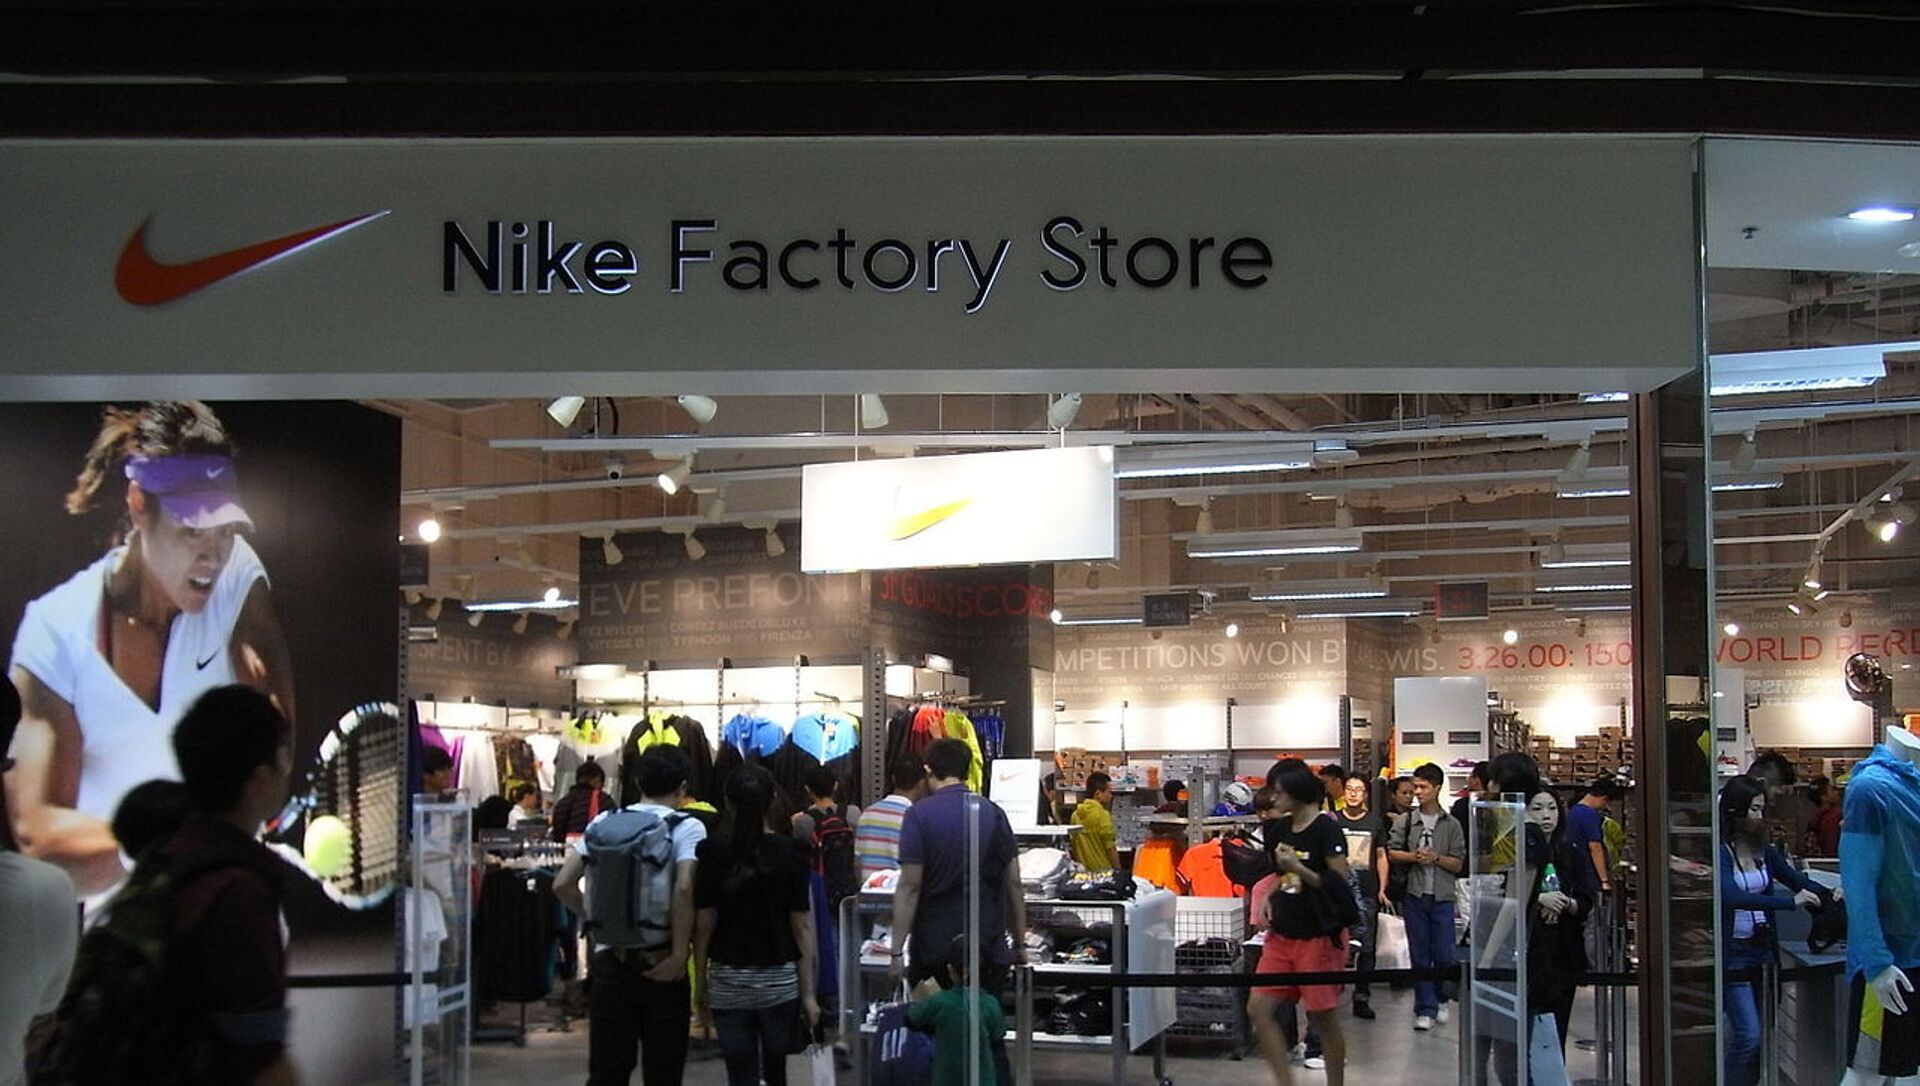 HK Tung Chung One CityGate shop Nike Factory Store - Sputnik International, 1920, 25.03.2021